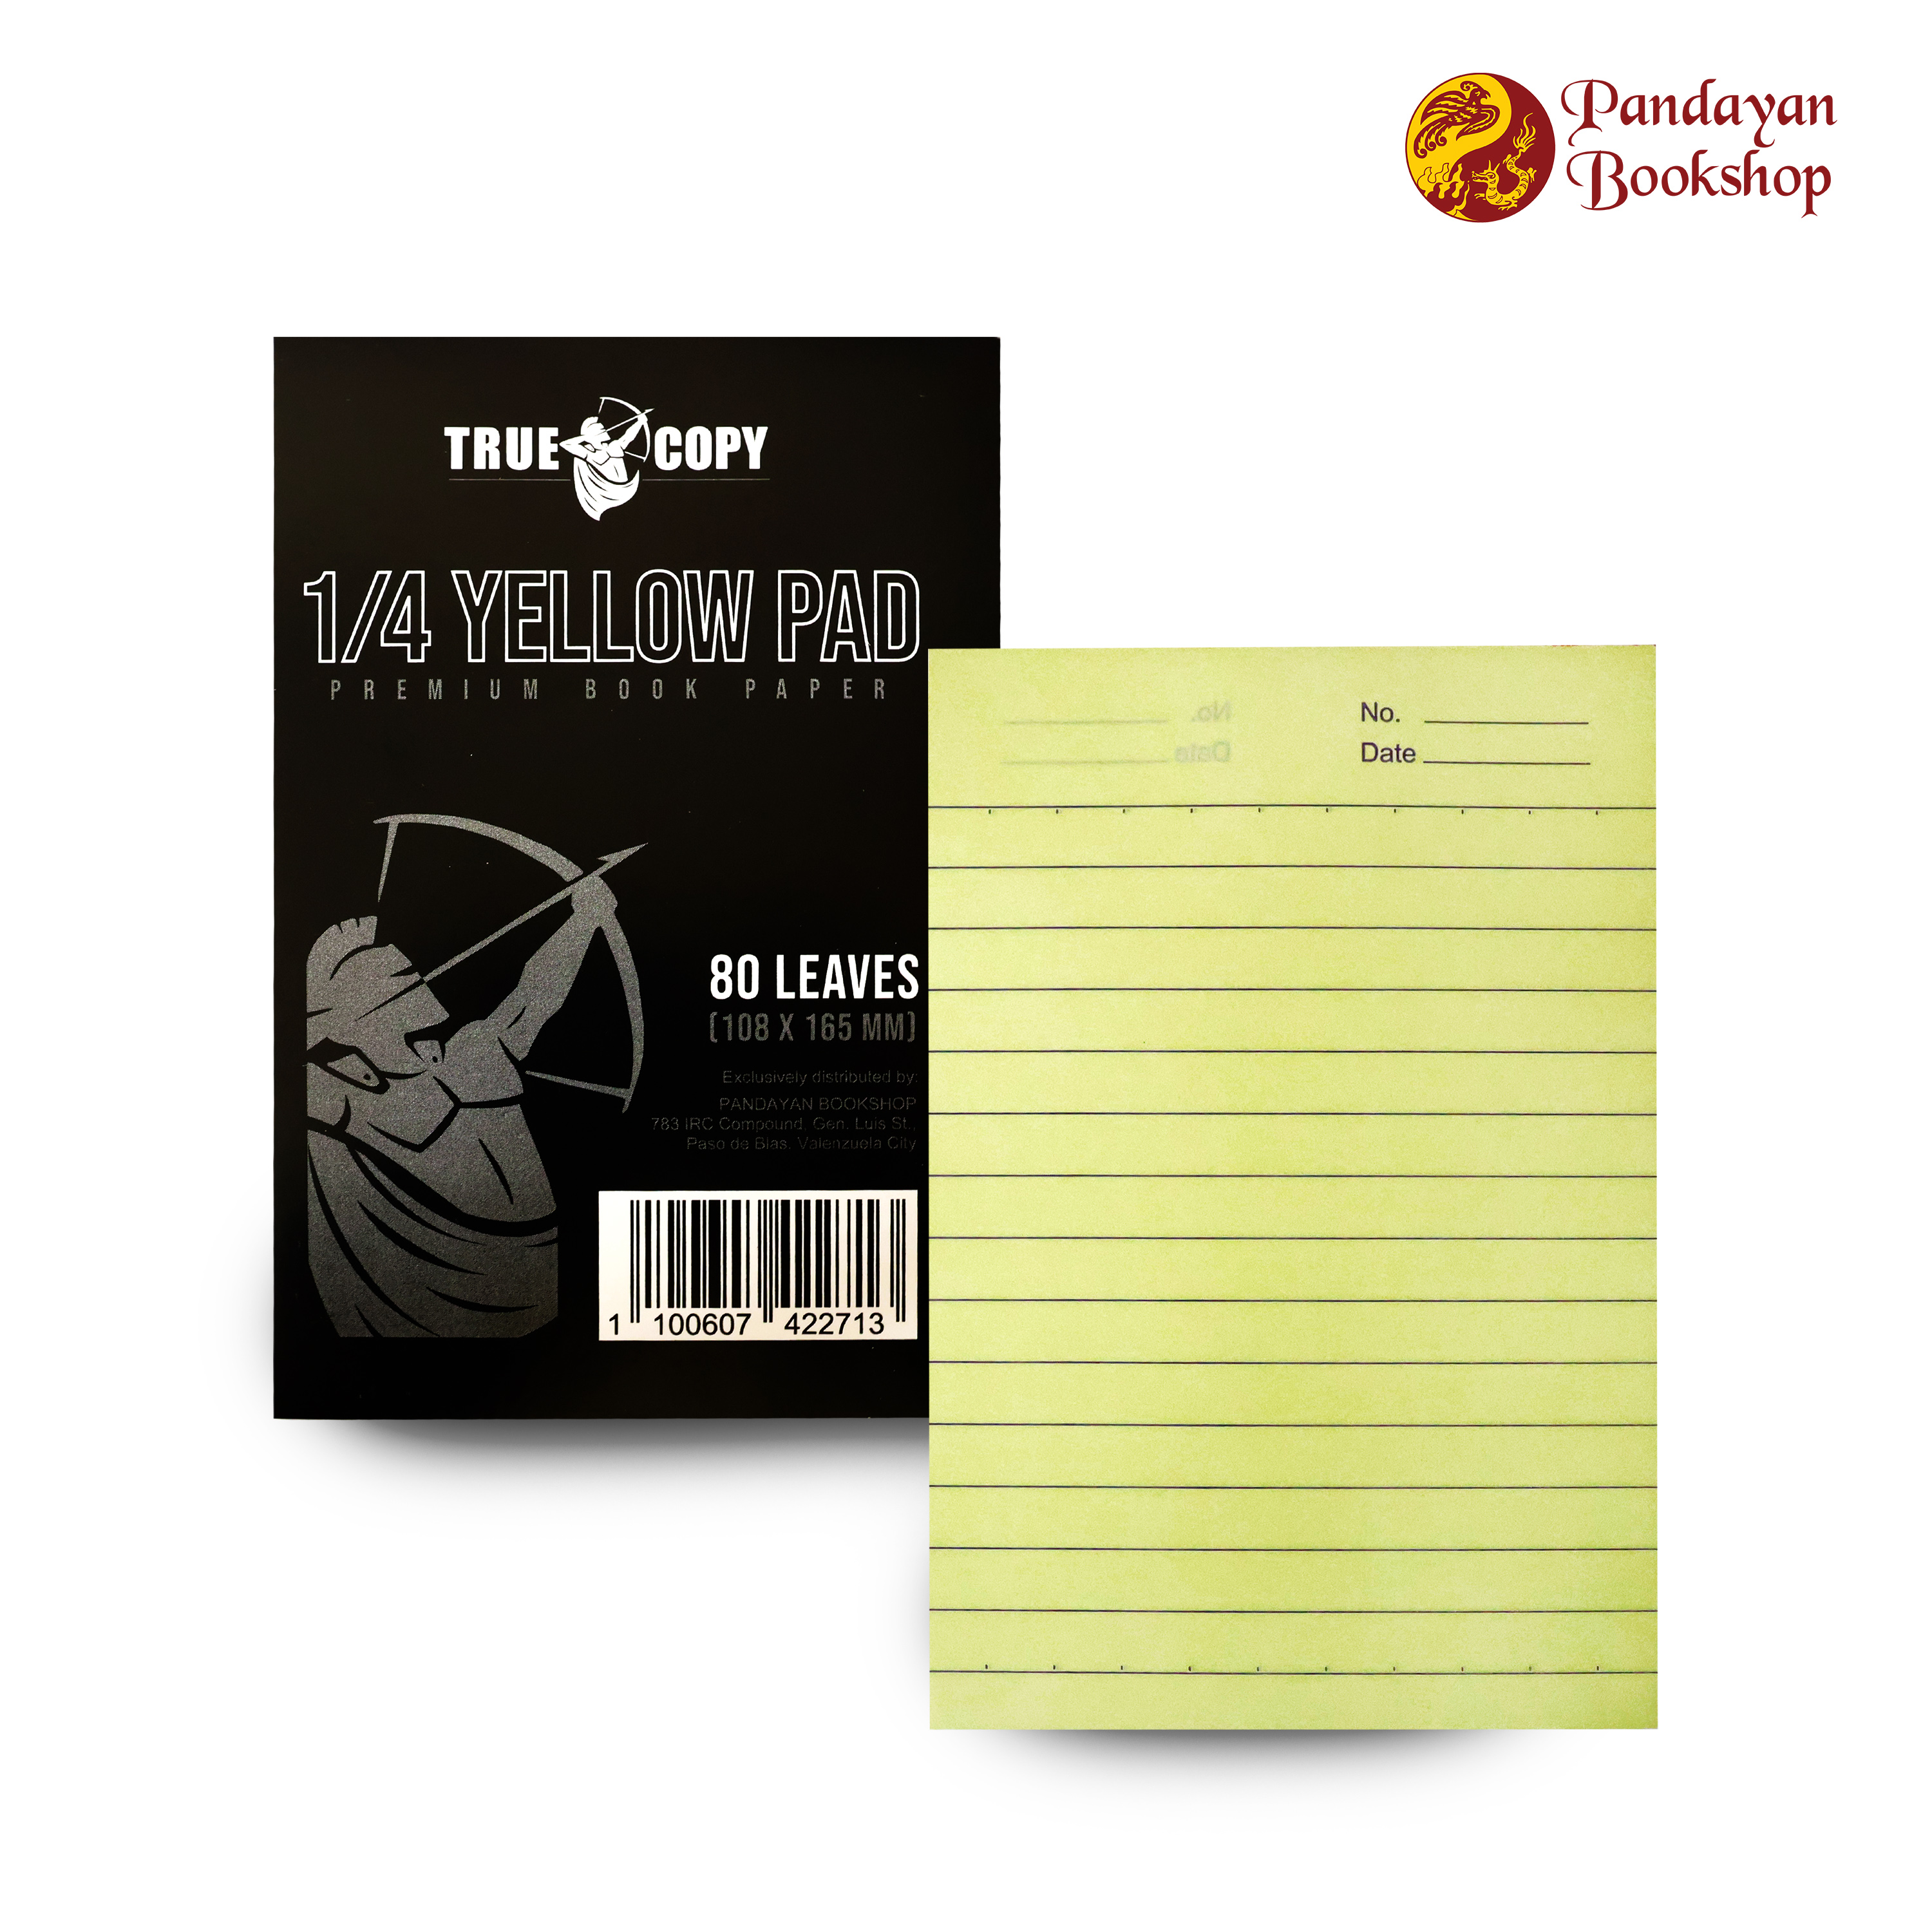 True Copy 1/4 Yellow Pad Premium Book Paper 80 Lea